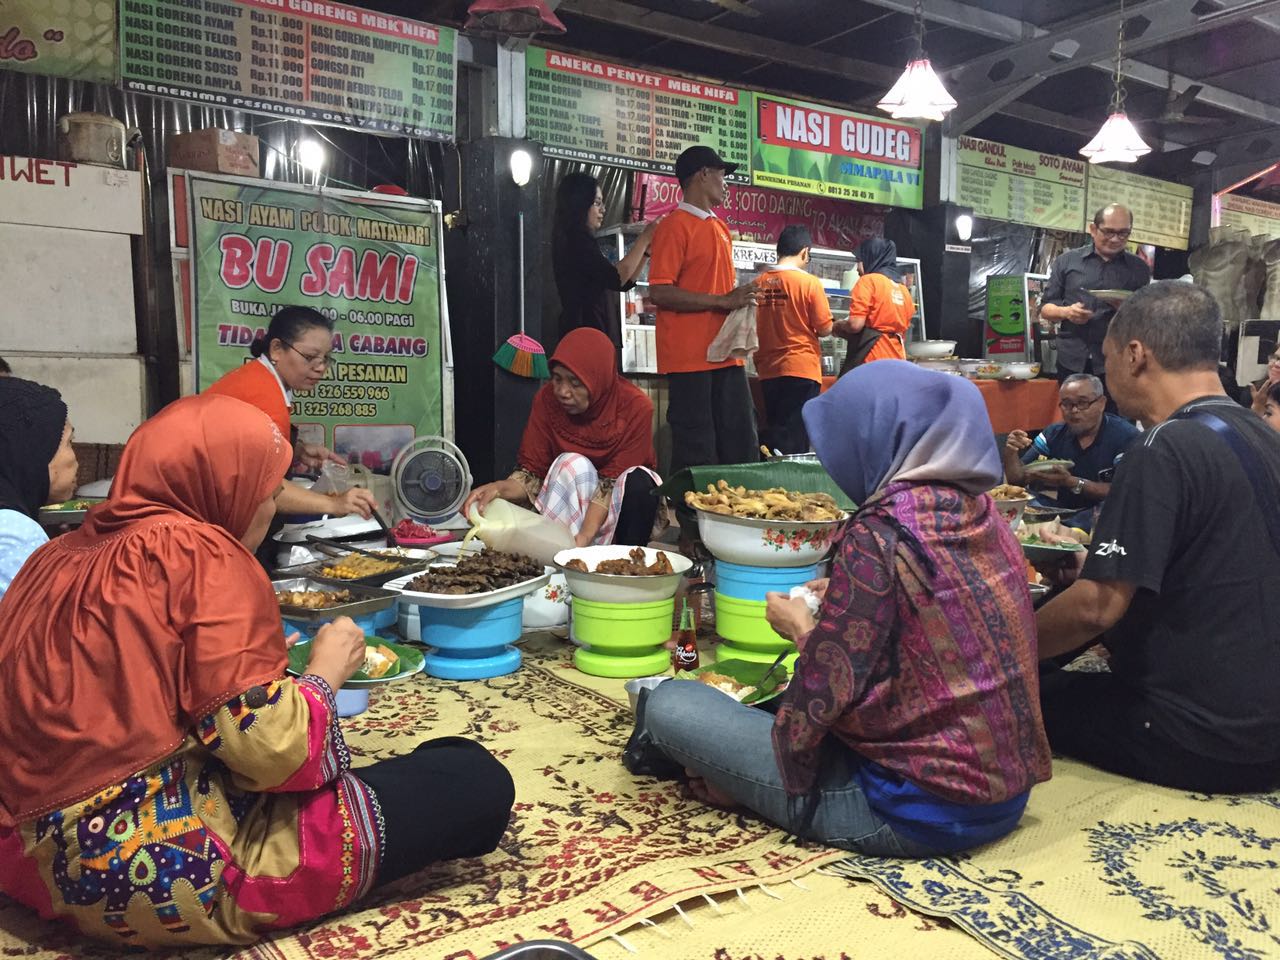 Suasana makan lesehan yang "gayeng" di nasi liwet Bu Sami (Photo: Fanny Sue/ VM)